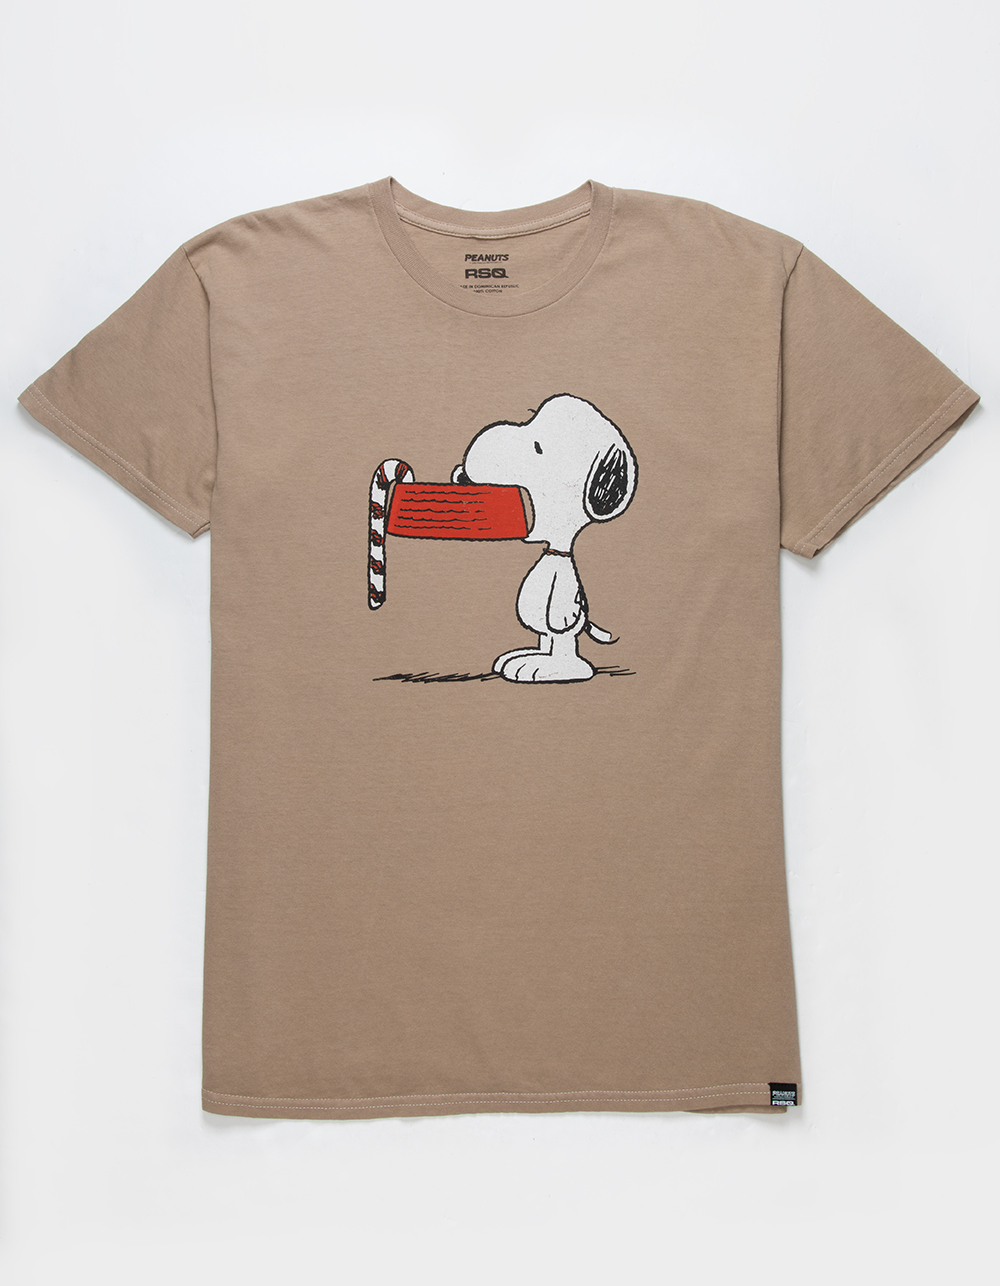 Peanuts' Snoopy 2 Piece Jogger Set for Boys, Short Sleeve Shirt